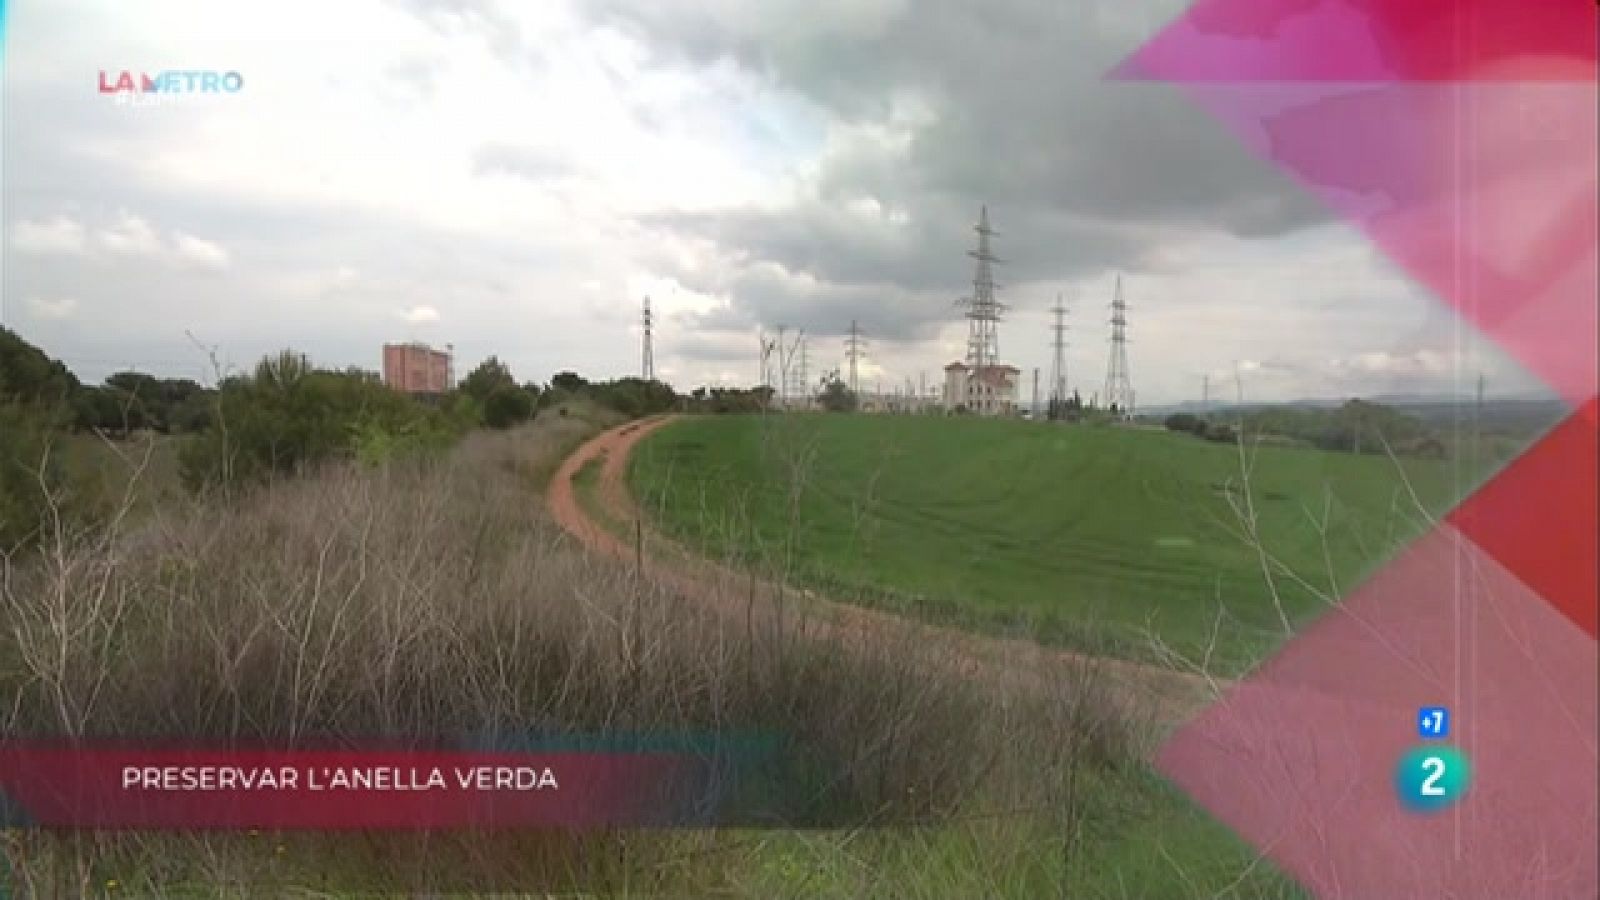 Preservar l'anella verda de Terrassa | La Metro - RTVE Catalunya